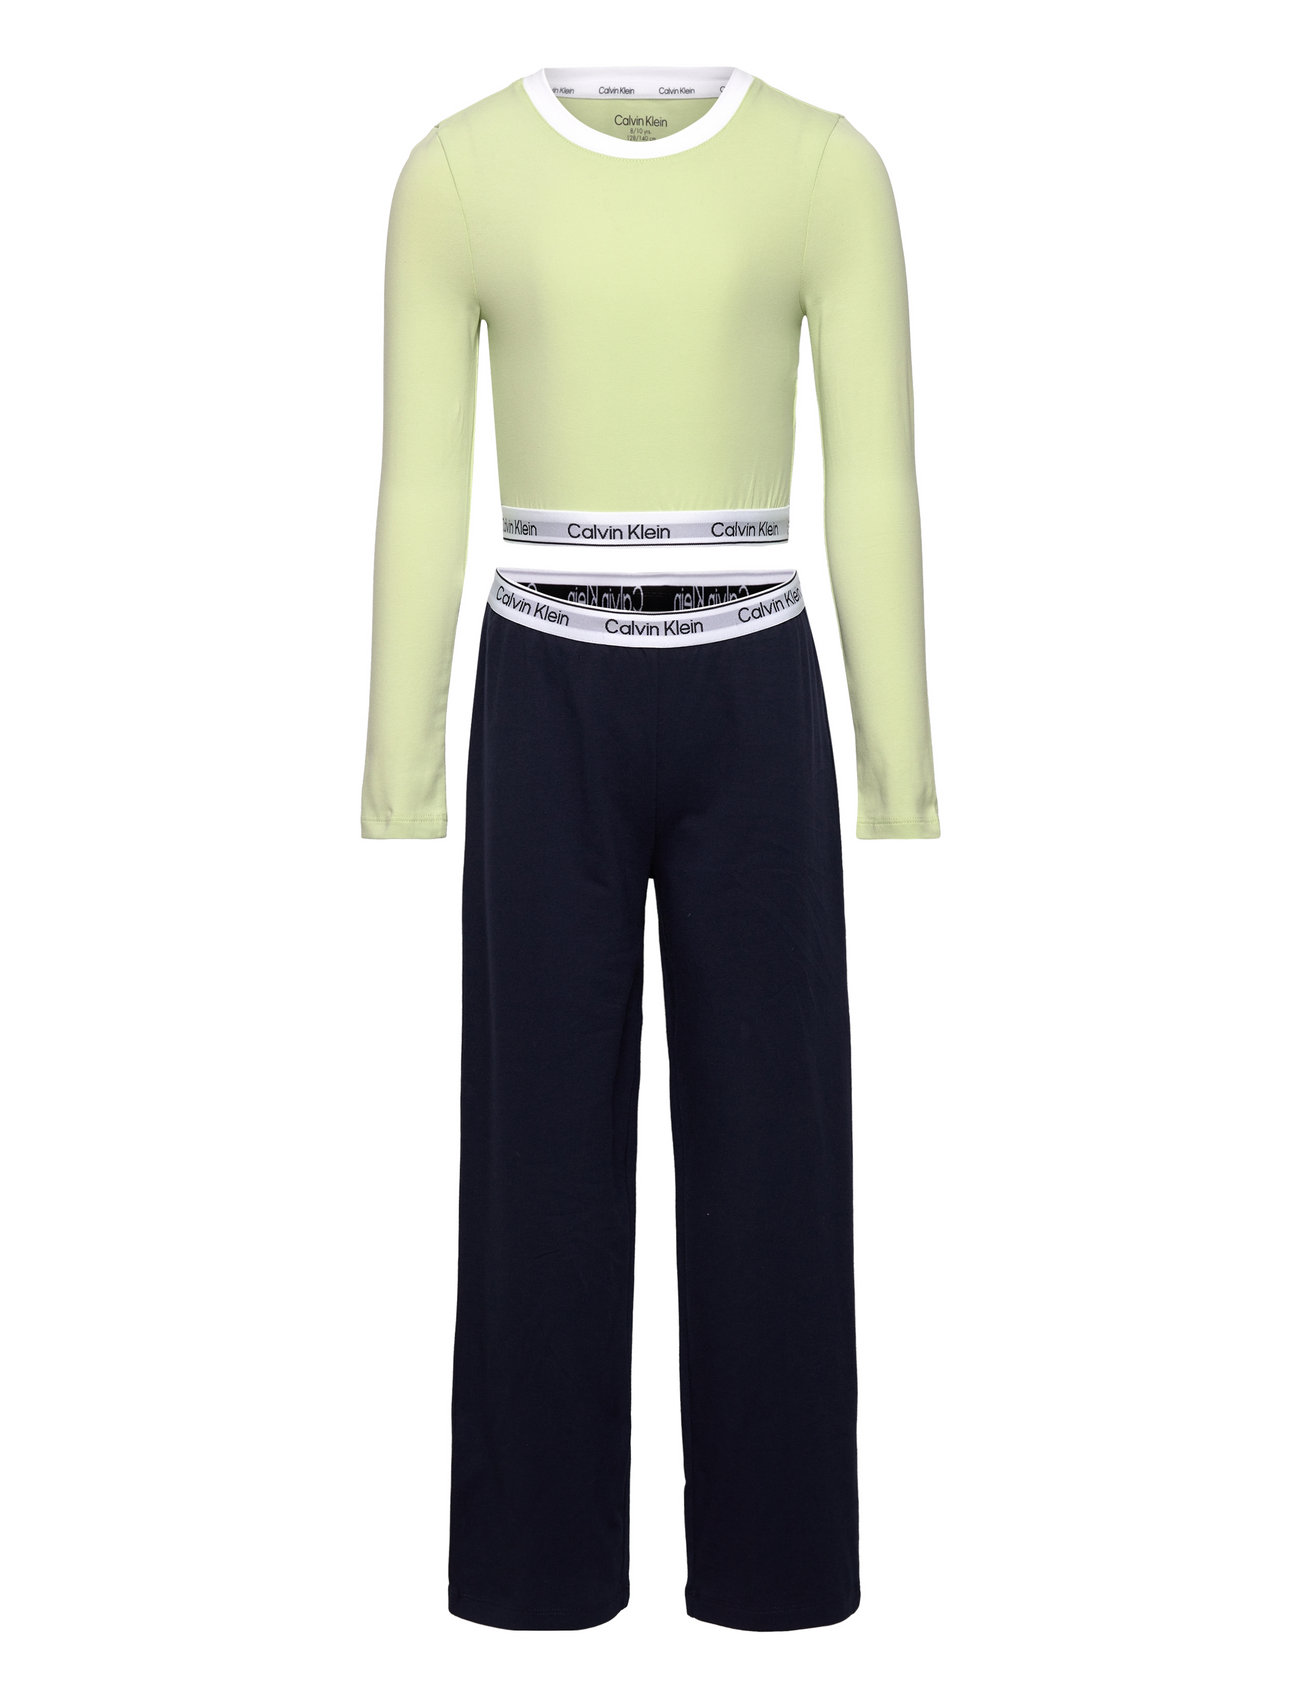 Knit Pj Set Sets Sets With Long-sleeved T-shirt Multi/patterned Calvin Klein